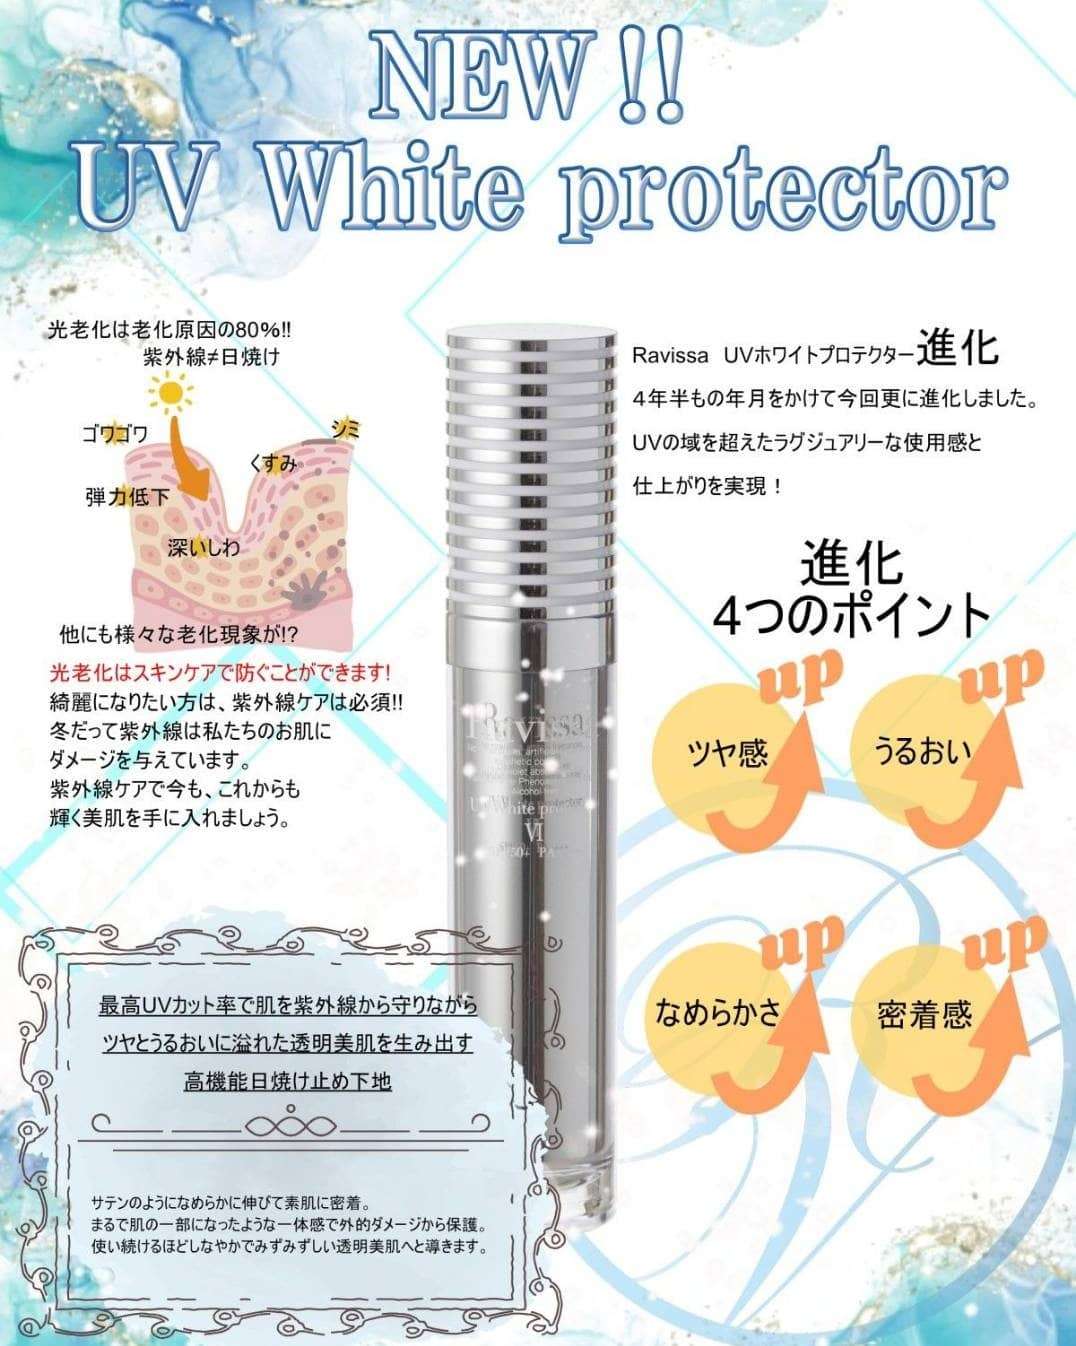 UVホワイトプロテクターがさらに進化しました！！